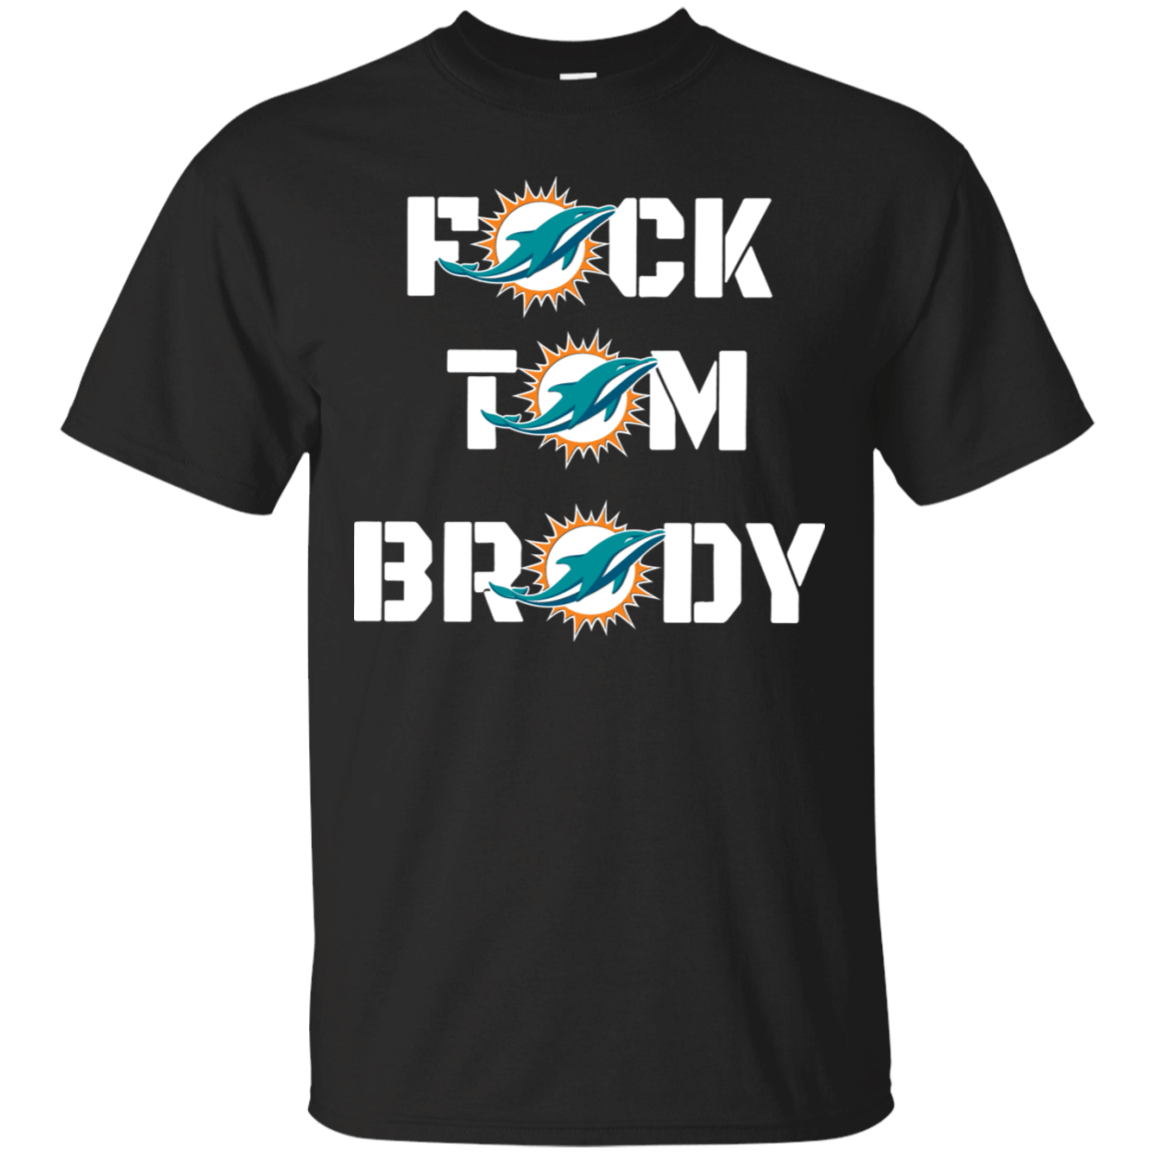 Miami Dolphins Shop - Miami Dolphins fck Tom Brady shirt Cotton Shirt 1